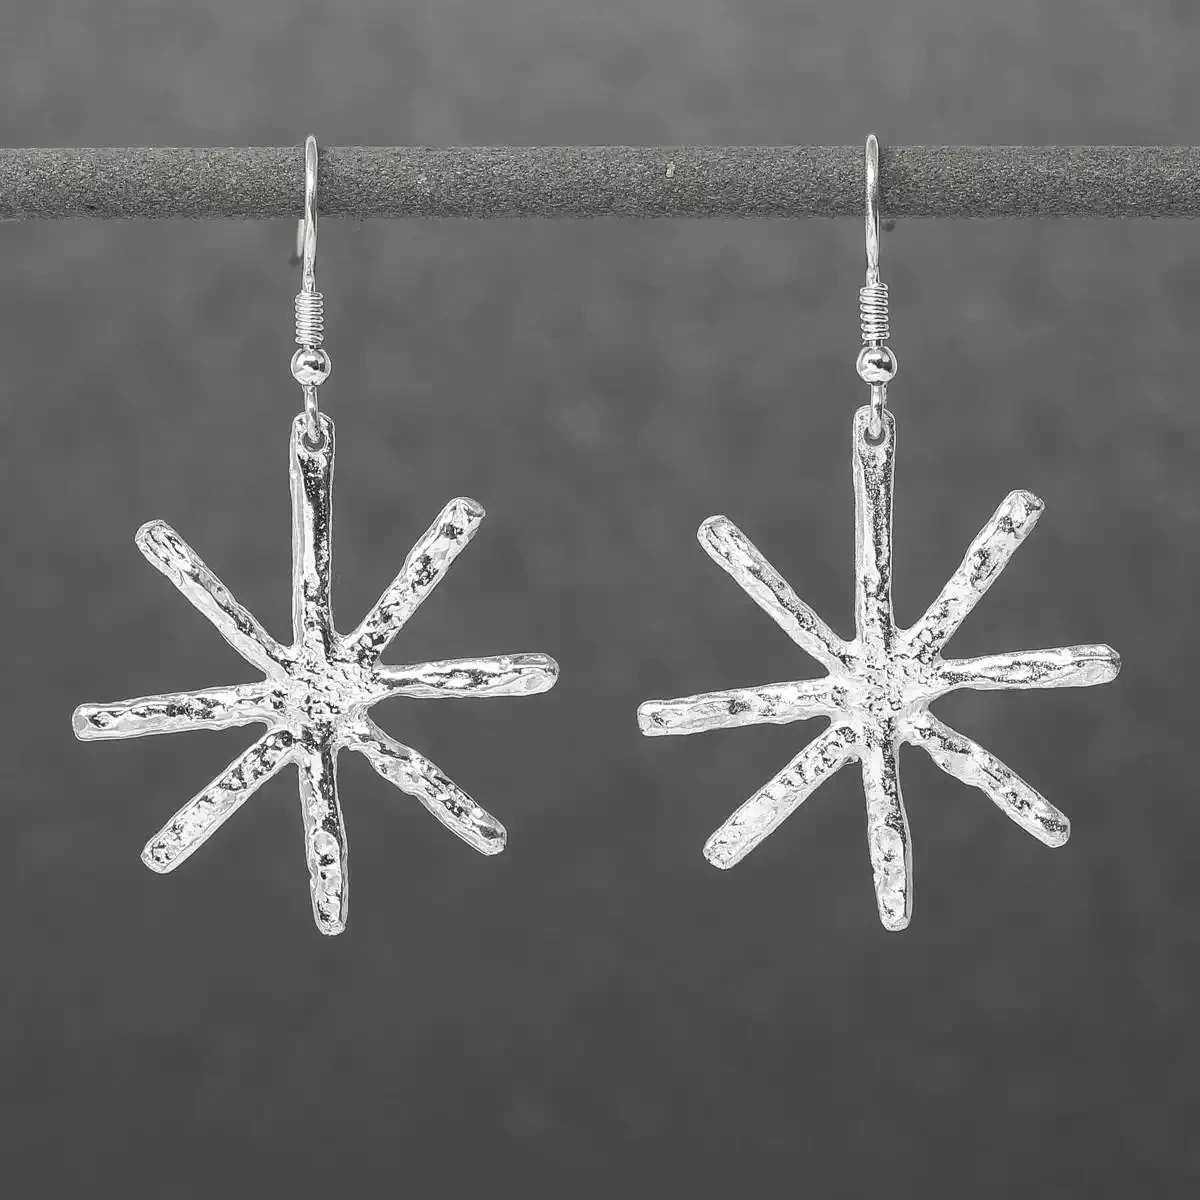 Snowflake Silver Drop Earrings - Medium by Silverfish